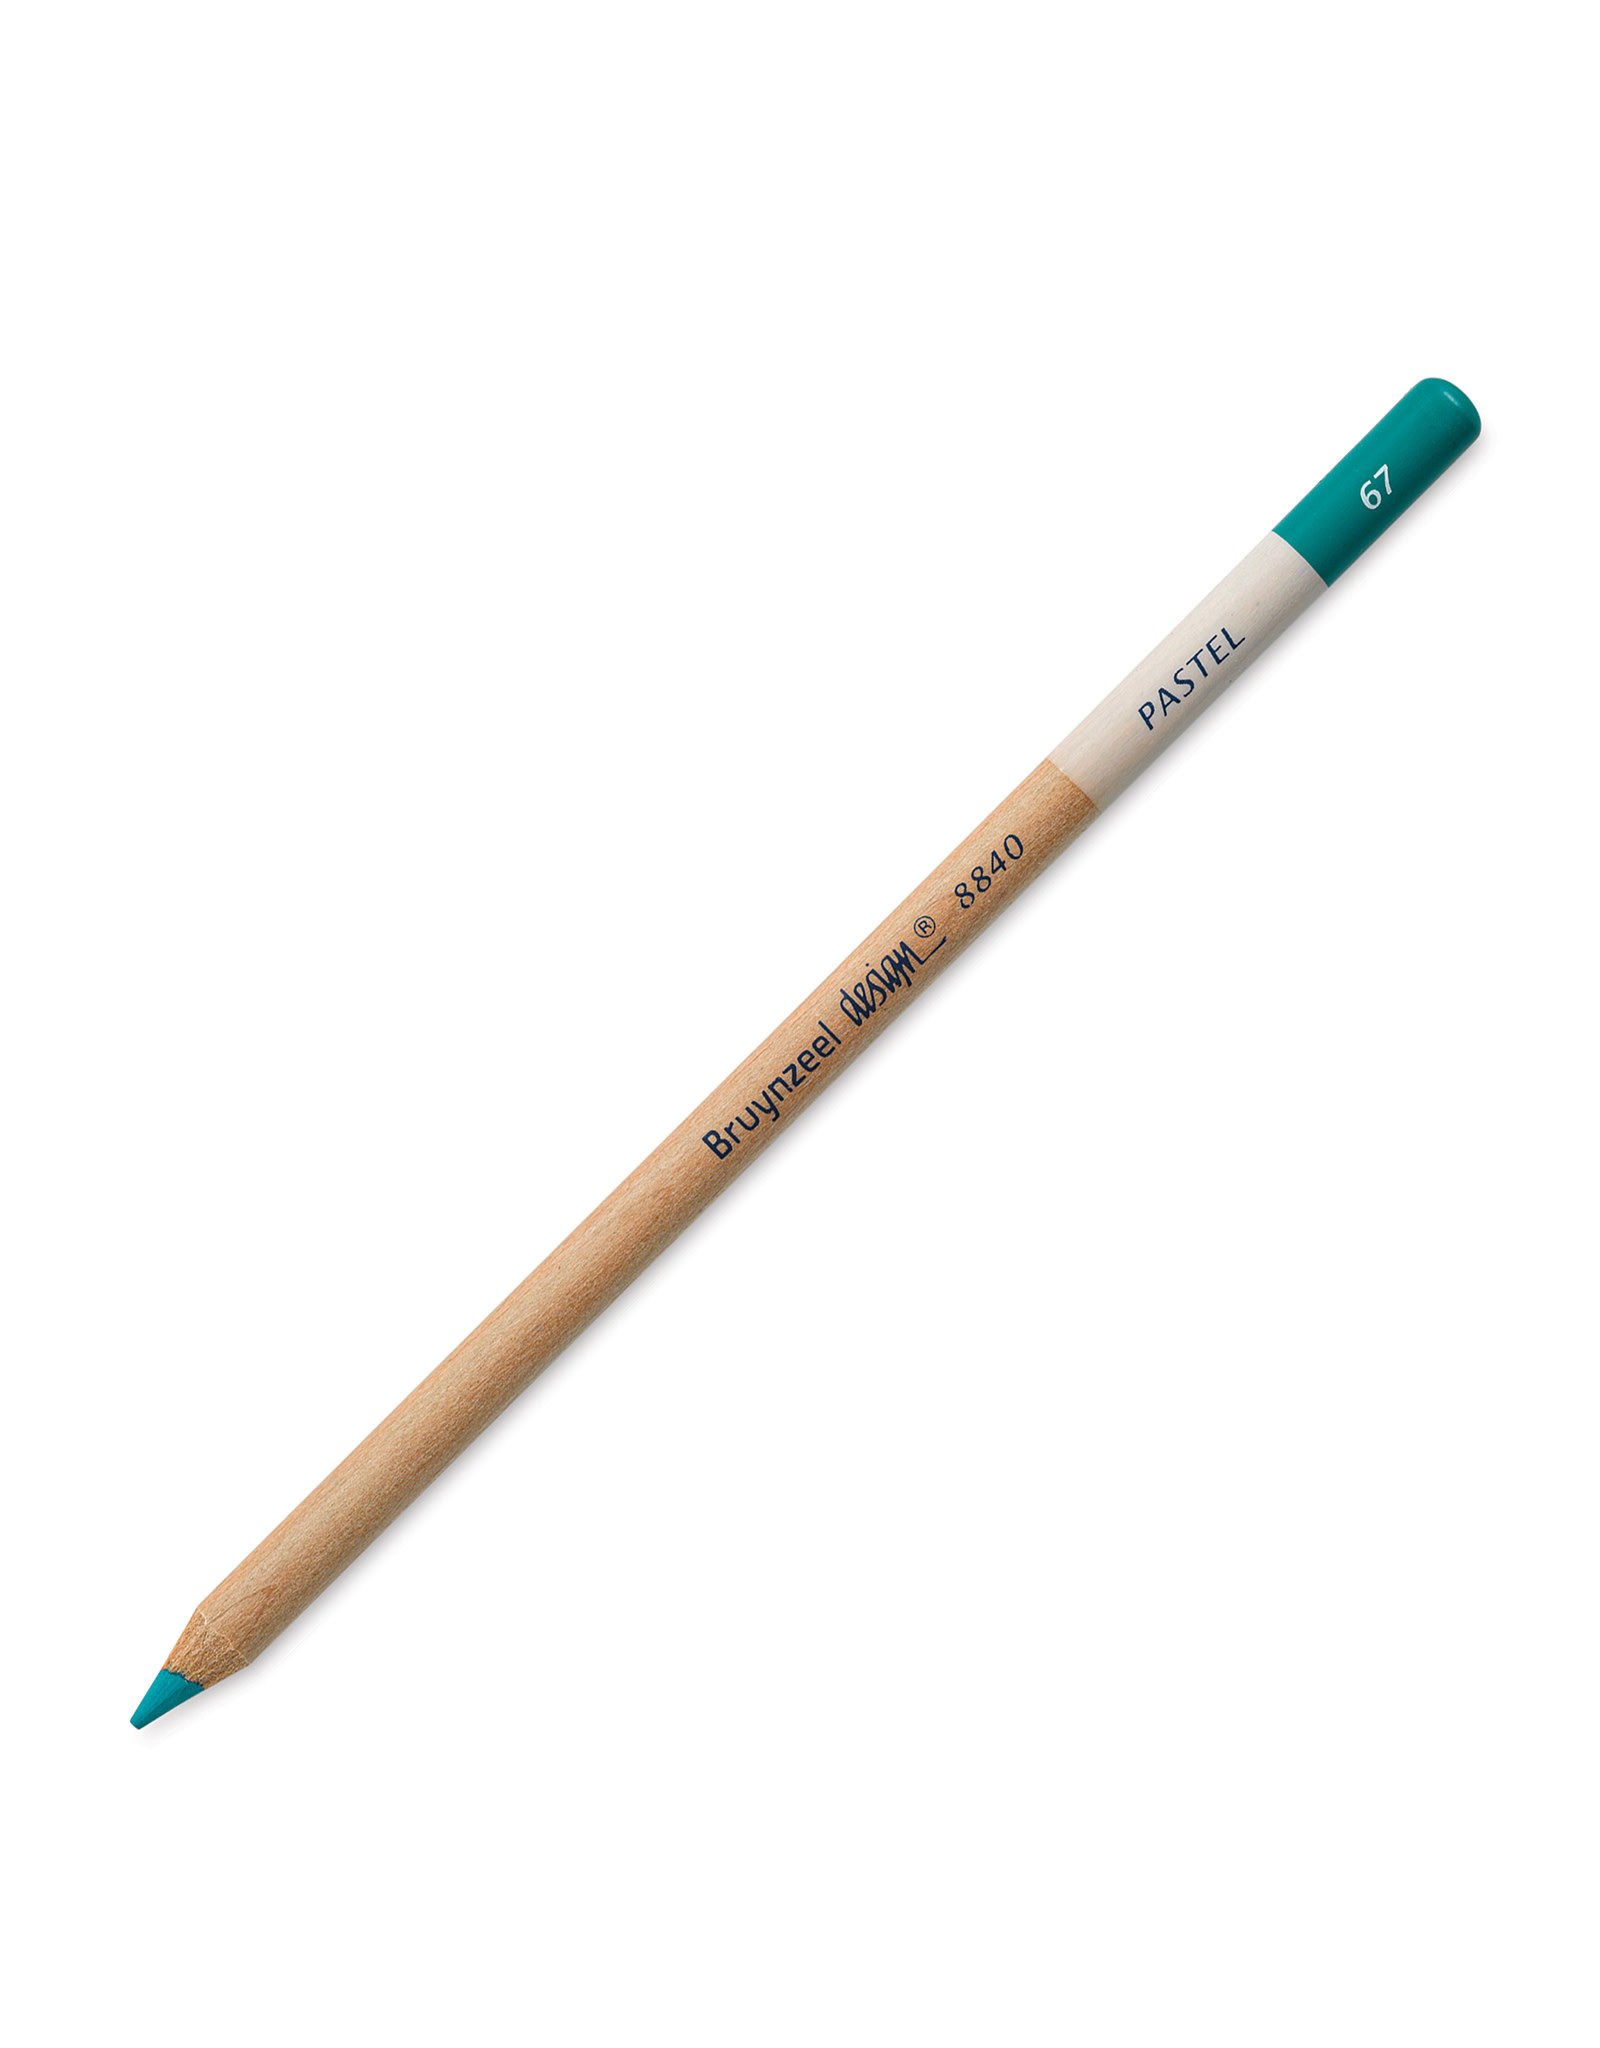 Royal Talens Bruynzeel Design Pastel Pencil, Green Blue